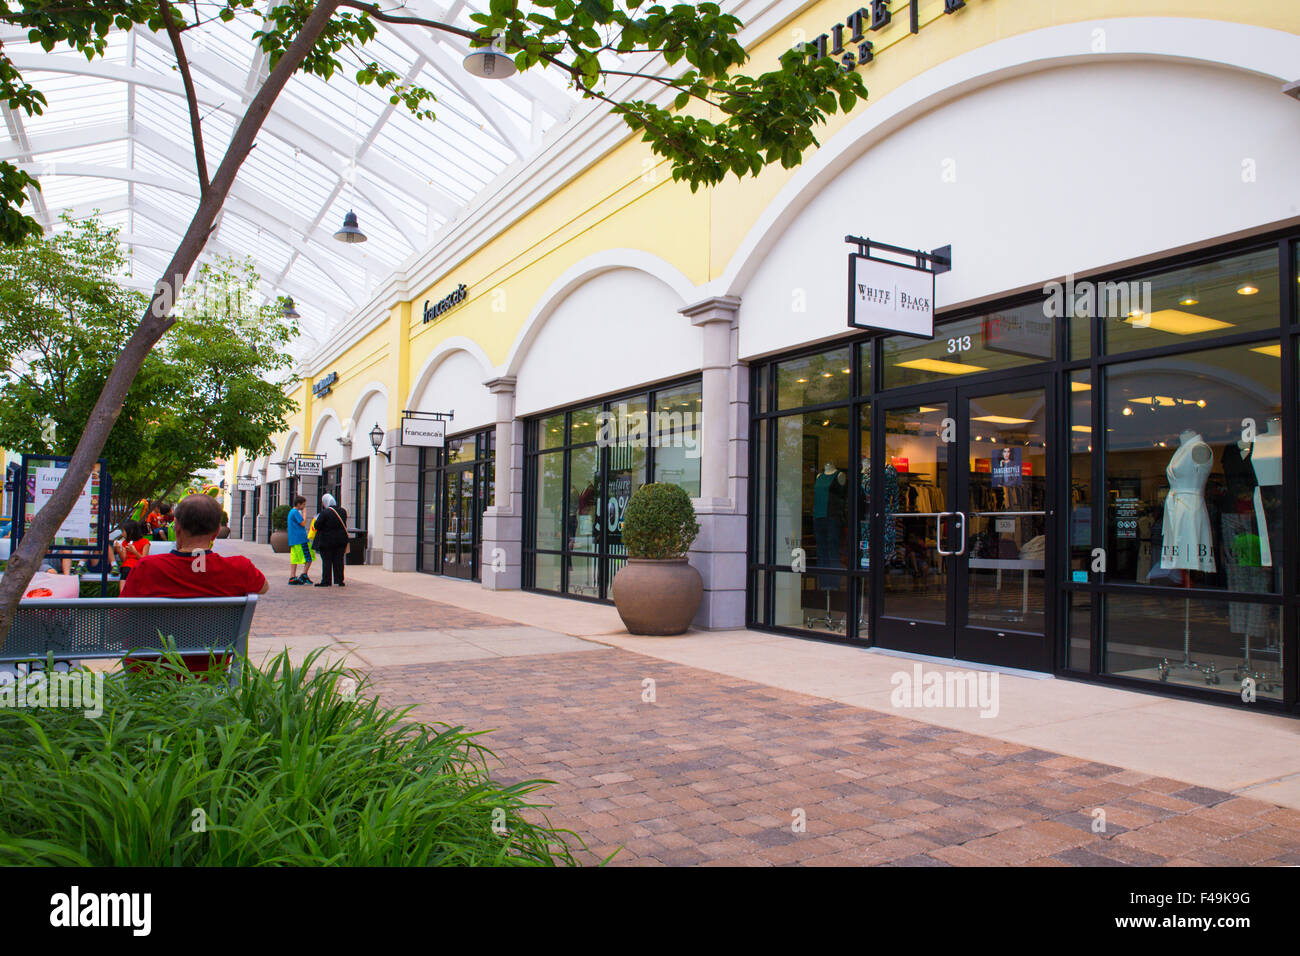 Outdoor outlet mall -Fotos und -Bildmaterial in hoher Auflösung – Alamy